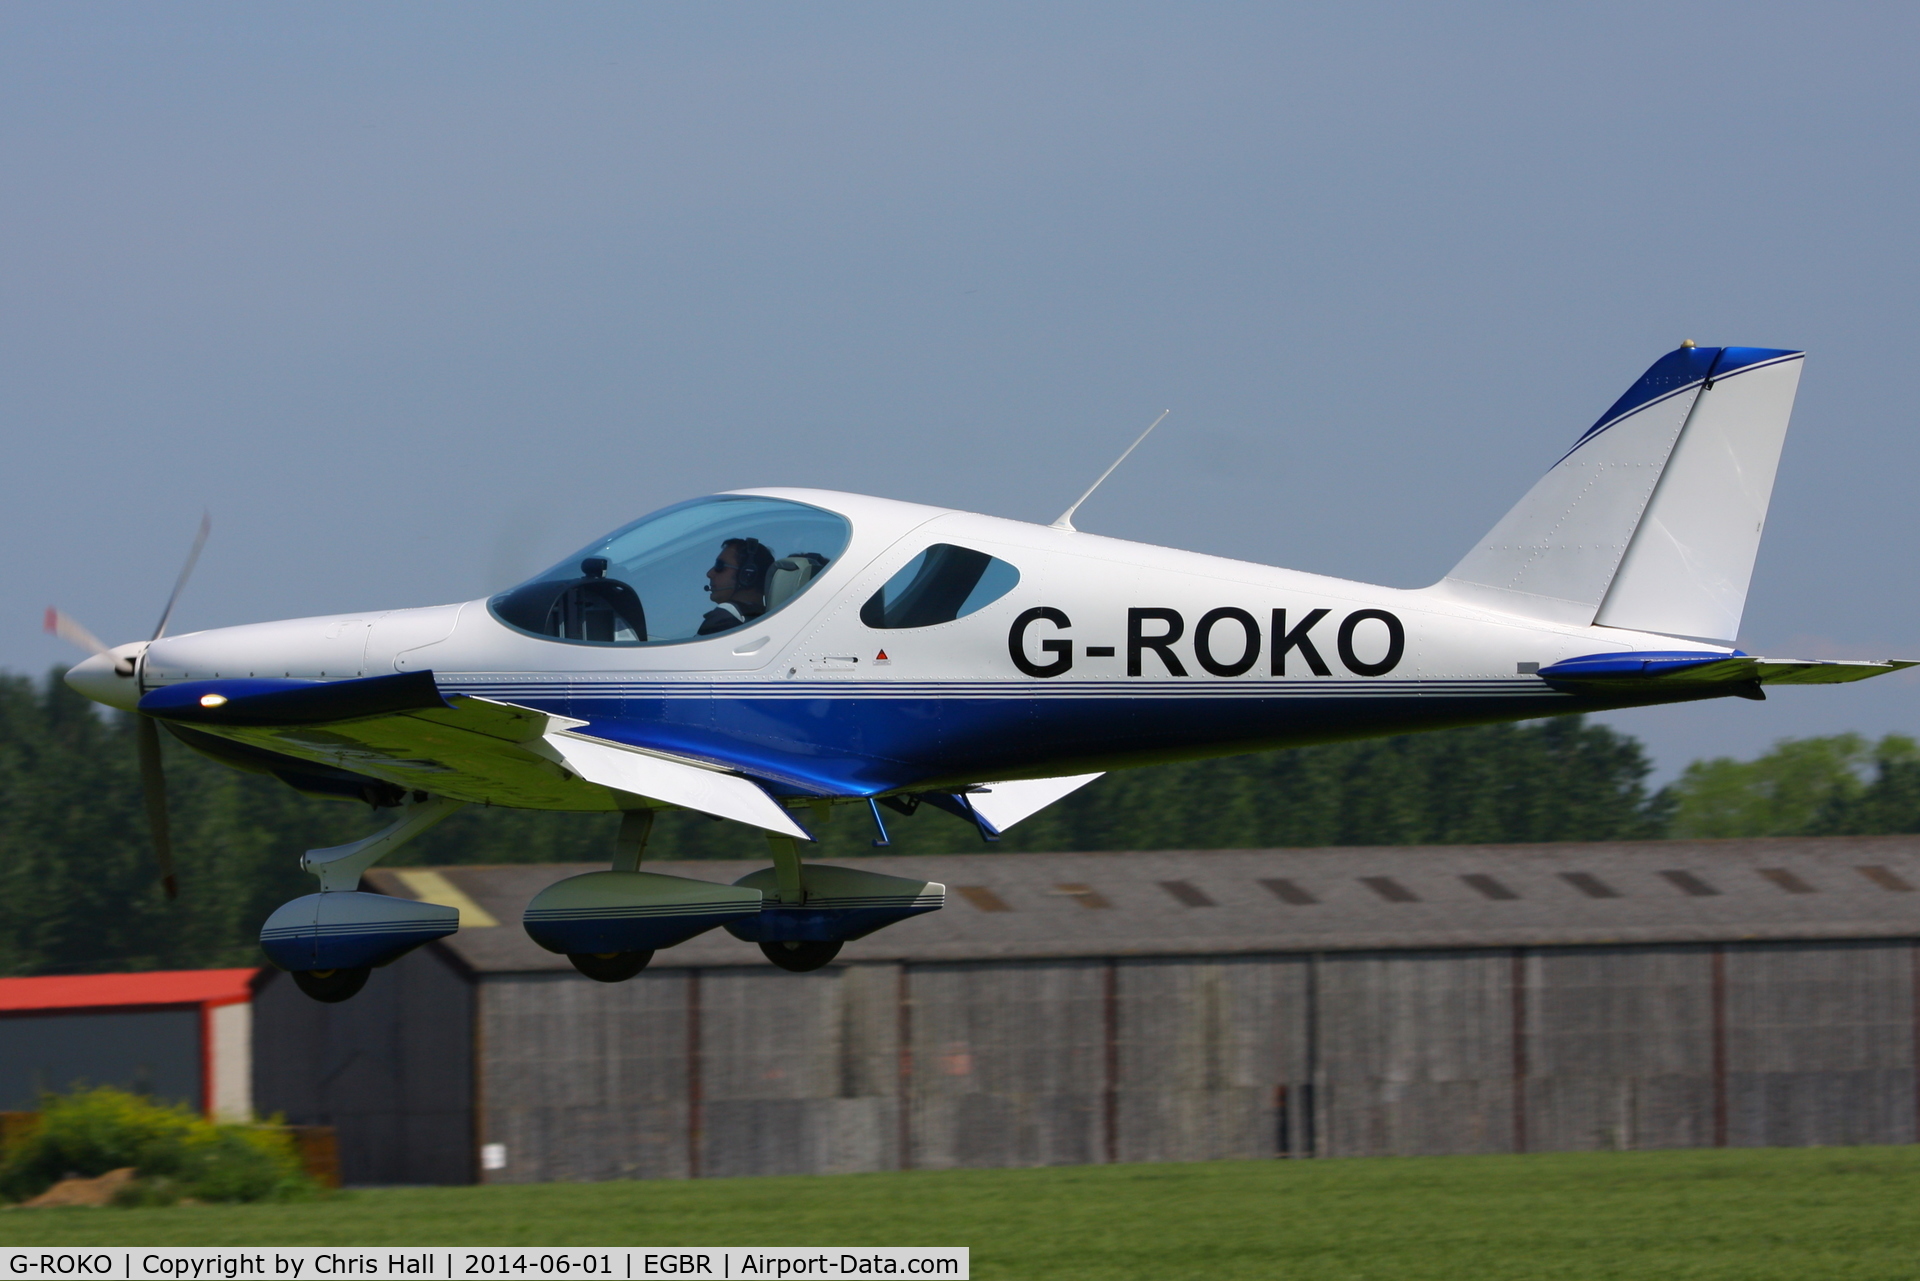 G-ROKO, 2009 Roko Aero NG4 HD C/N 020/2009, at Breighton's Open Cockpit & Biplane Fly-in, 2014